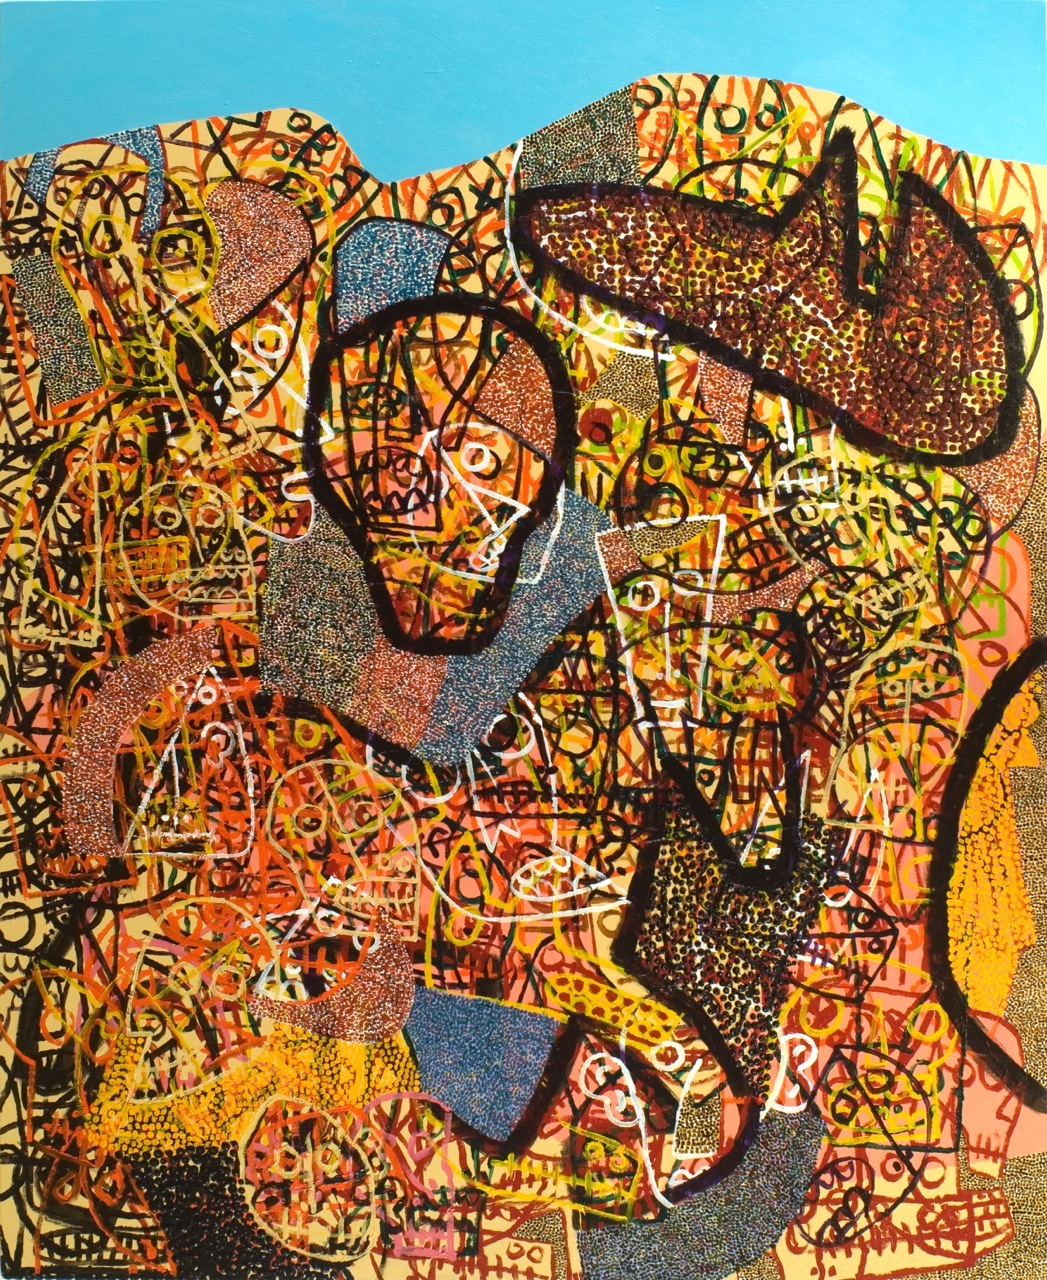 Zaragoza, right panel by Russ Warren at Les Yeux du Monde Art Gallery